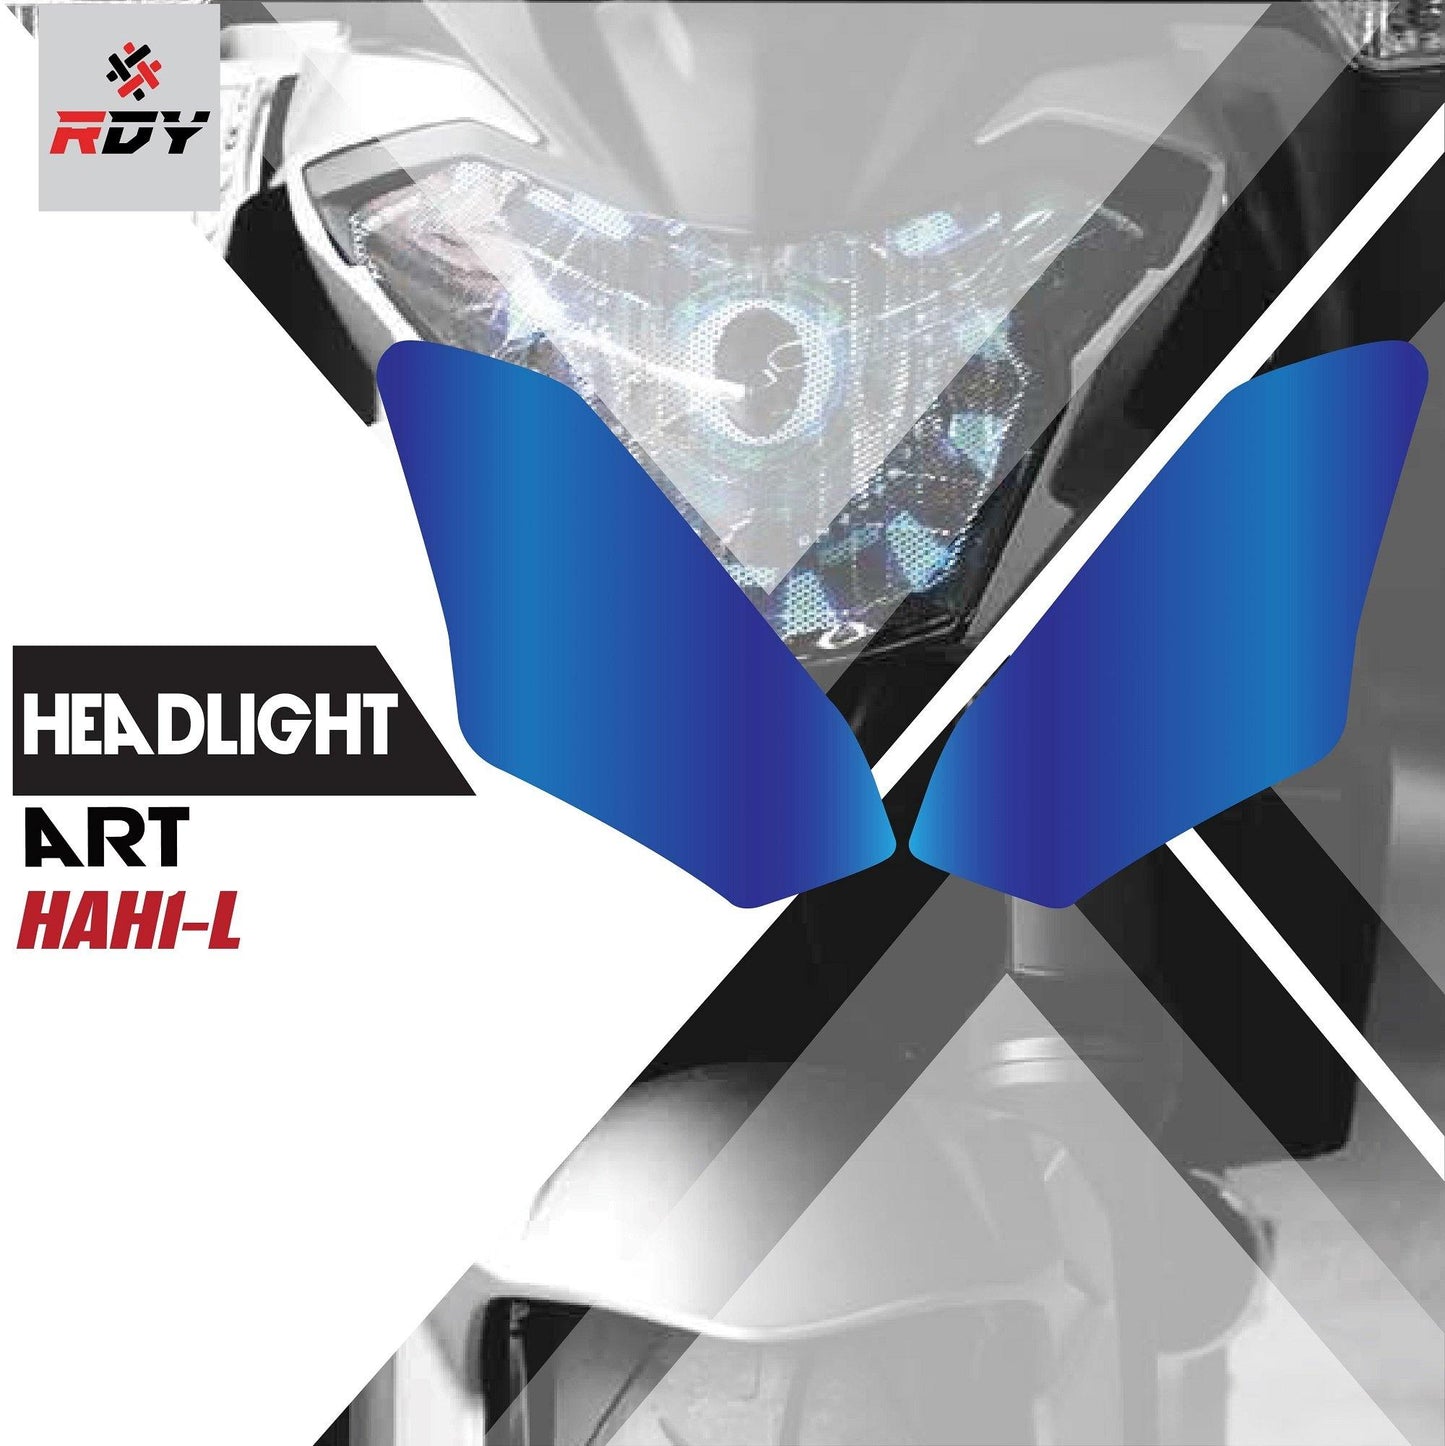 RDY Headlight Art fits for Honda CBR 1000RR SP - Durian Bikers